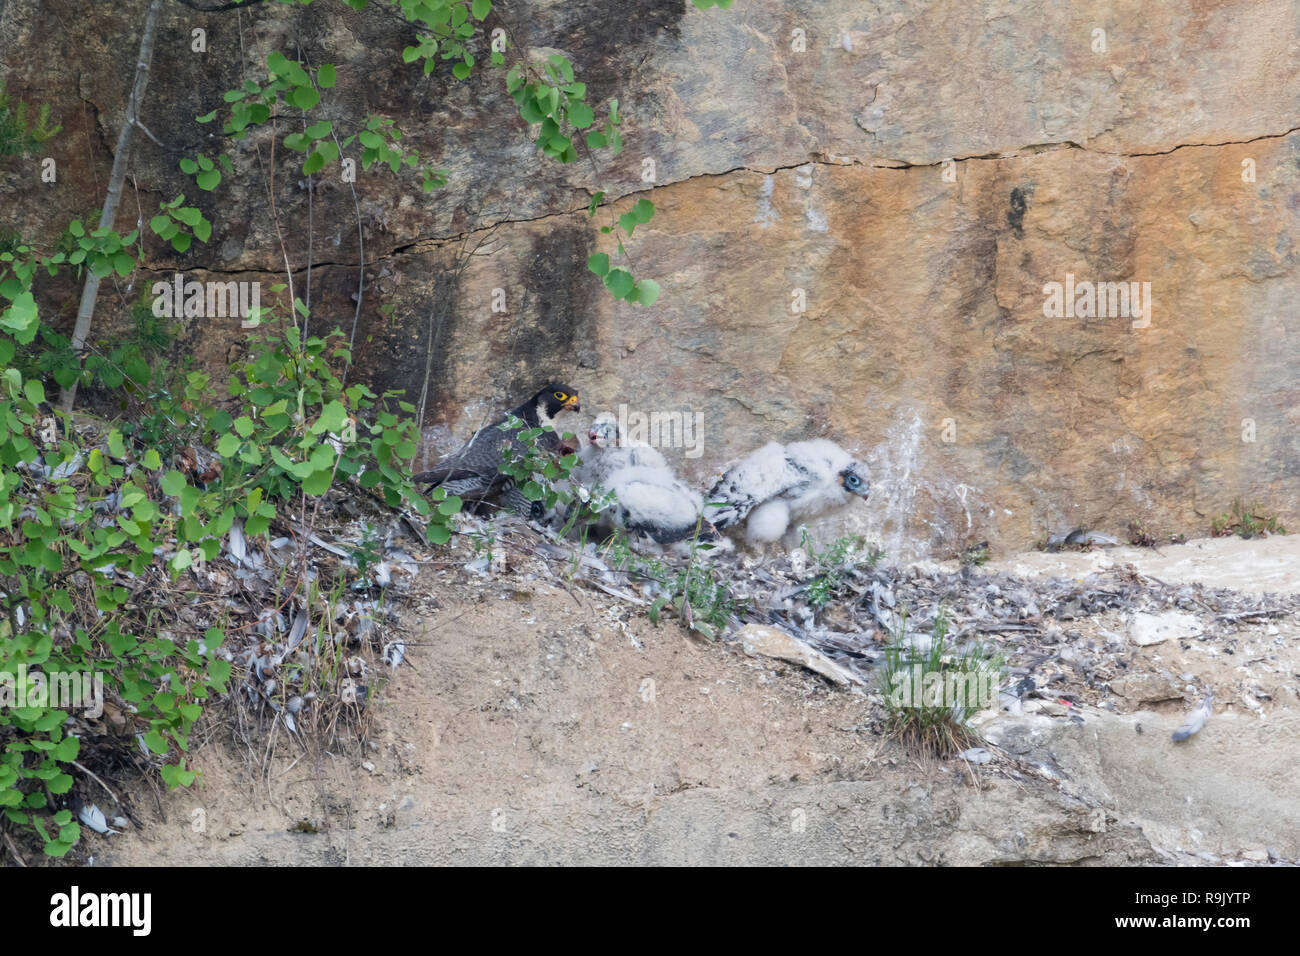 En Steilwand Wanderfalke Brut, Falco peregrinus, halcón peregrino que anidan en el headwall Foto de stock